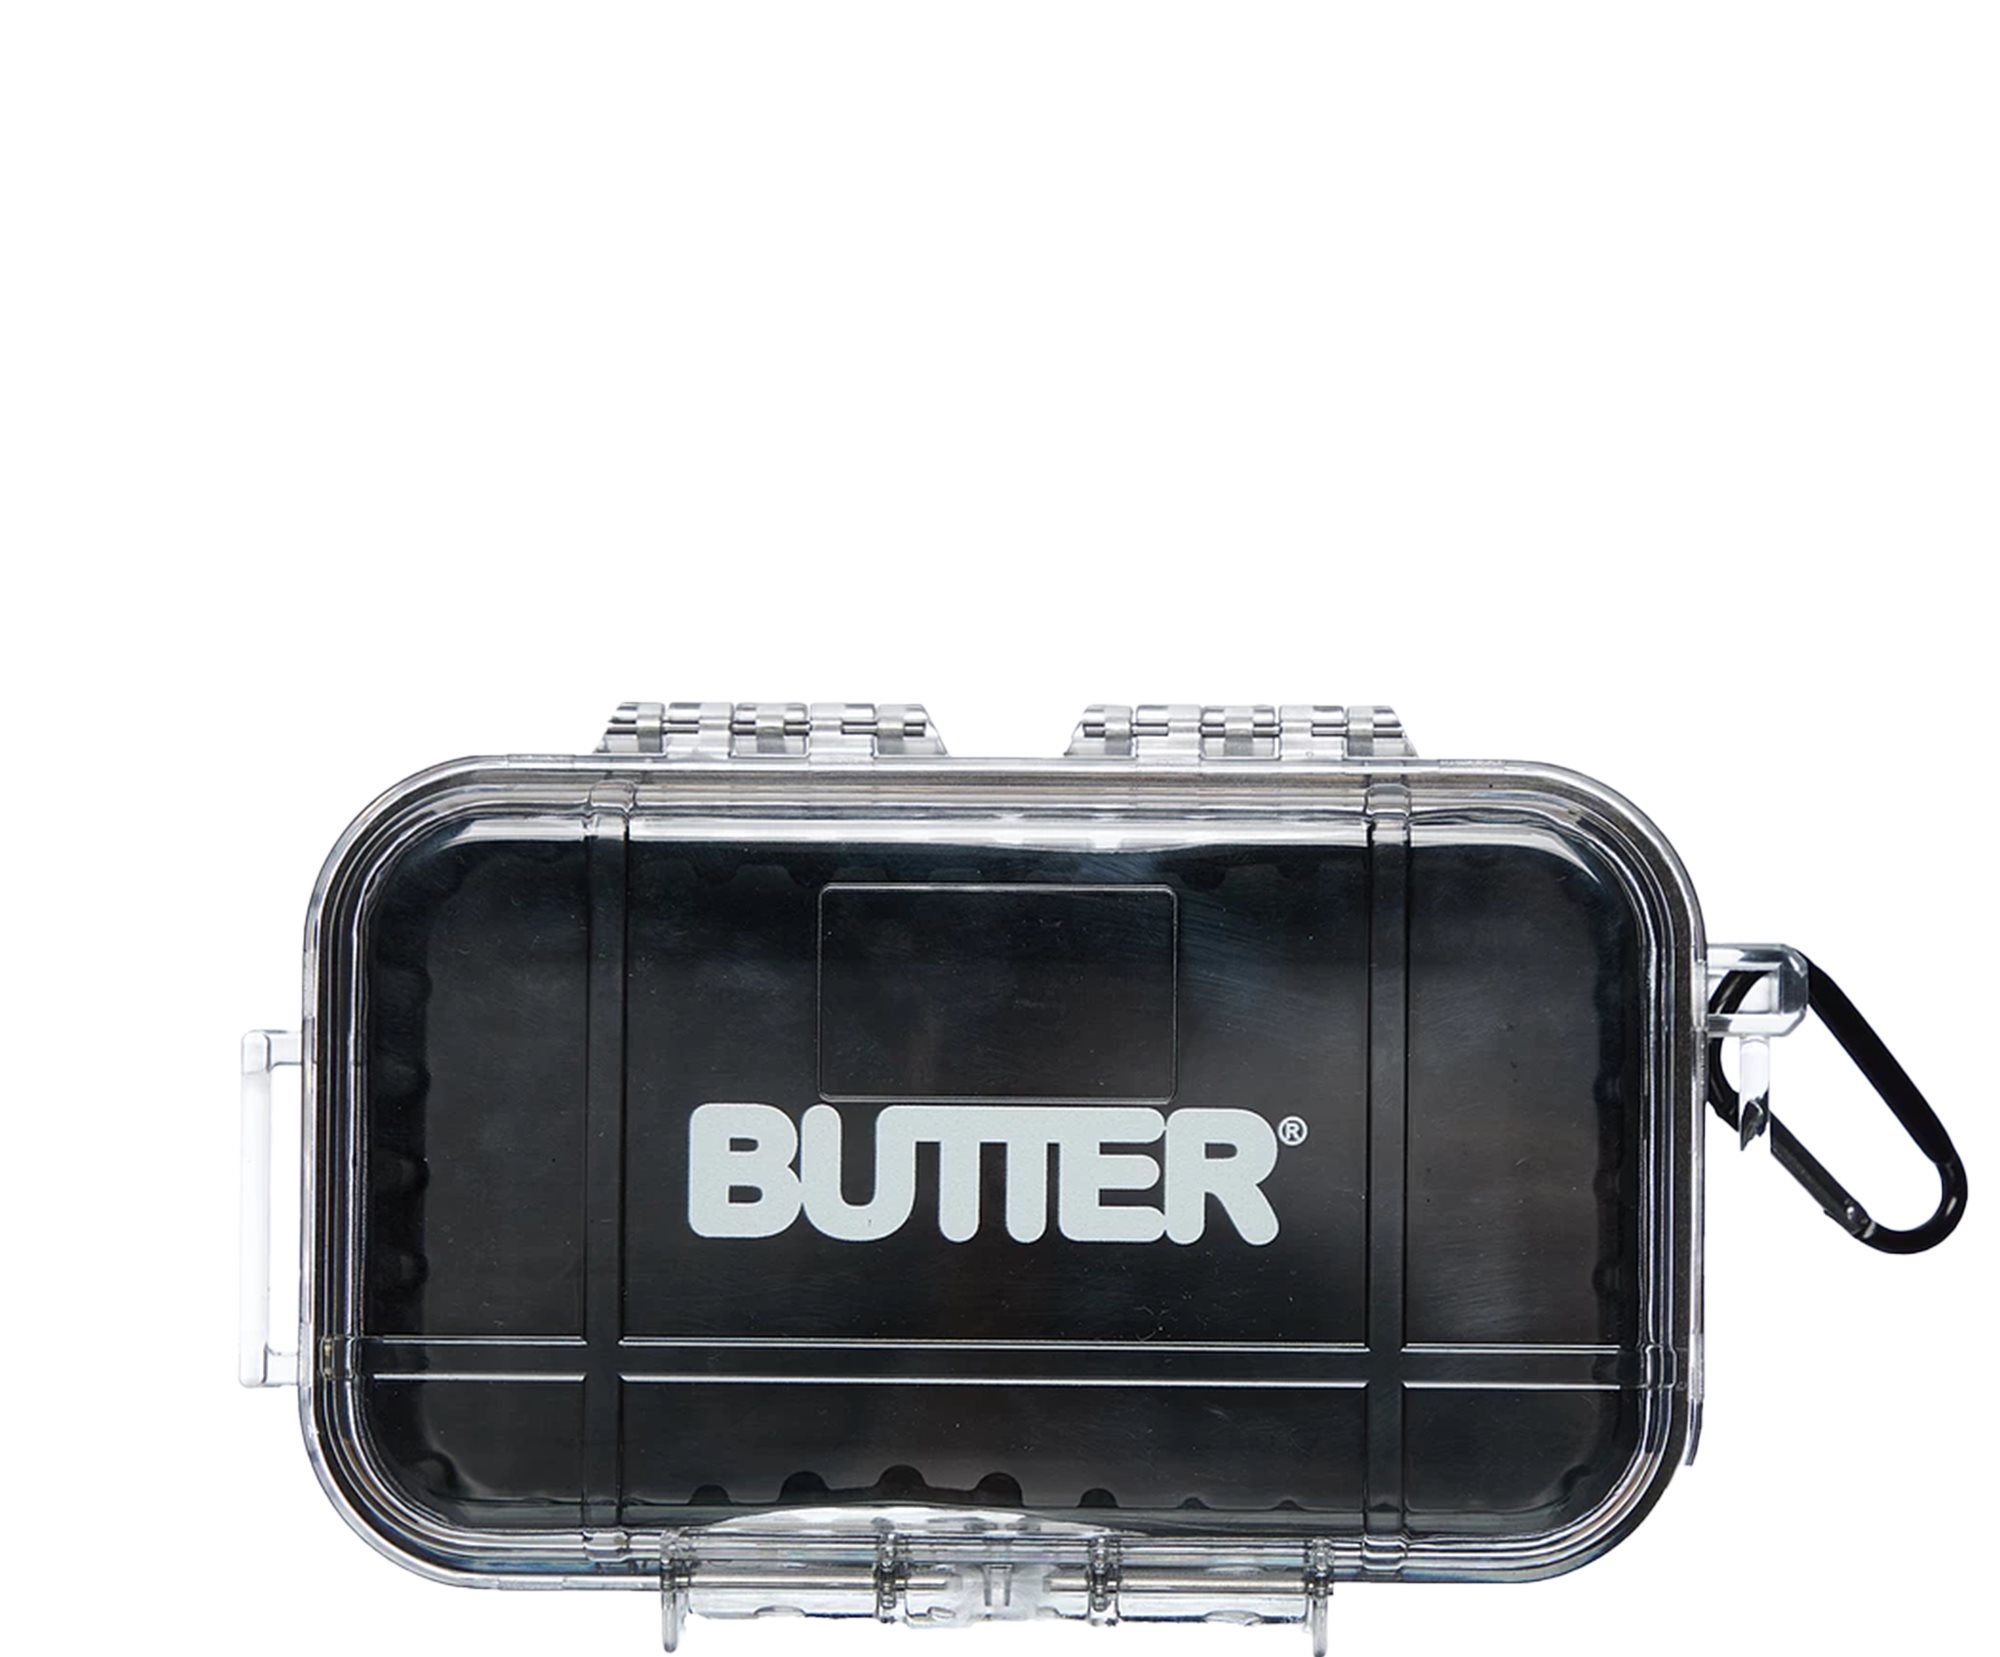 Butter Goods Accessories MINI LOGO CASE Black